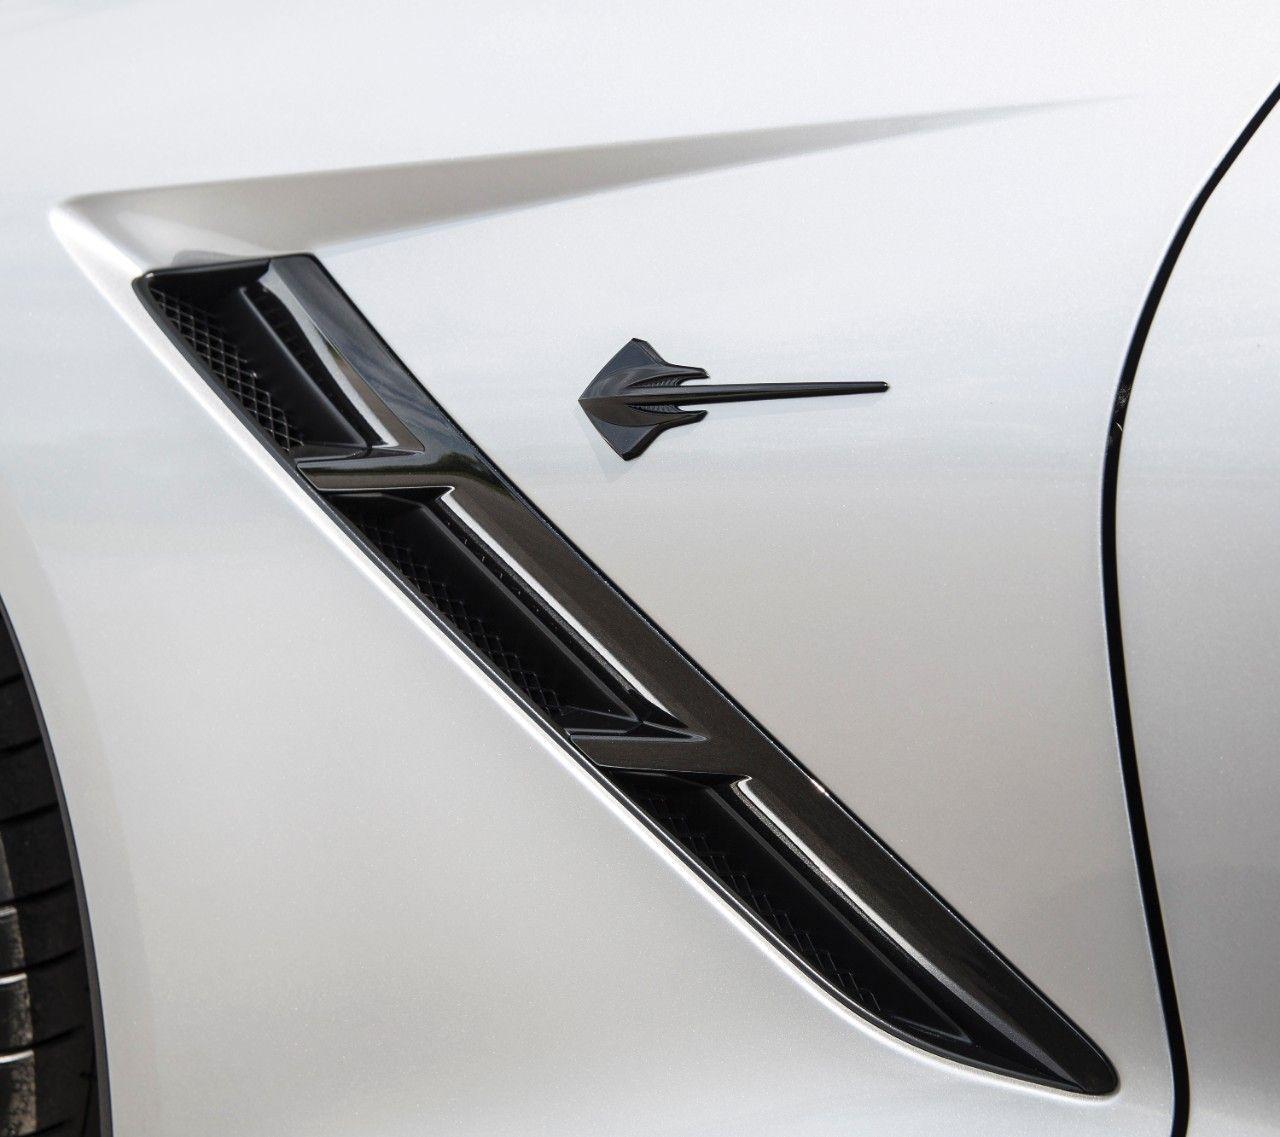 Chevy Corvette Stingray Logo - 2016 Corvette Changes And Updates Announced | GM Authority